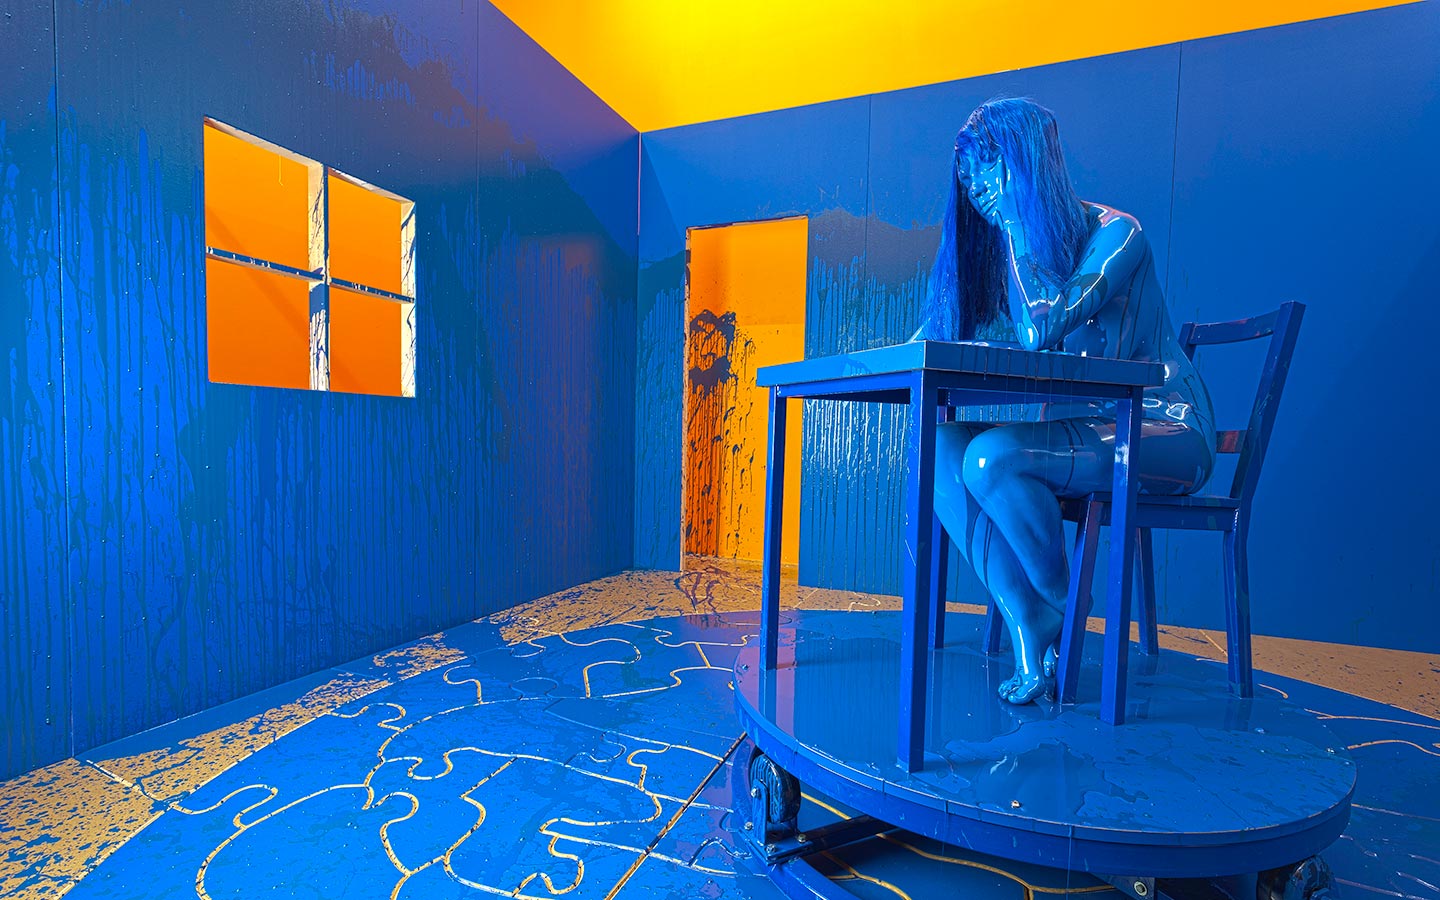 Blue Room de Richard Jackson au Rubell Museum